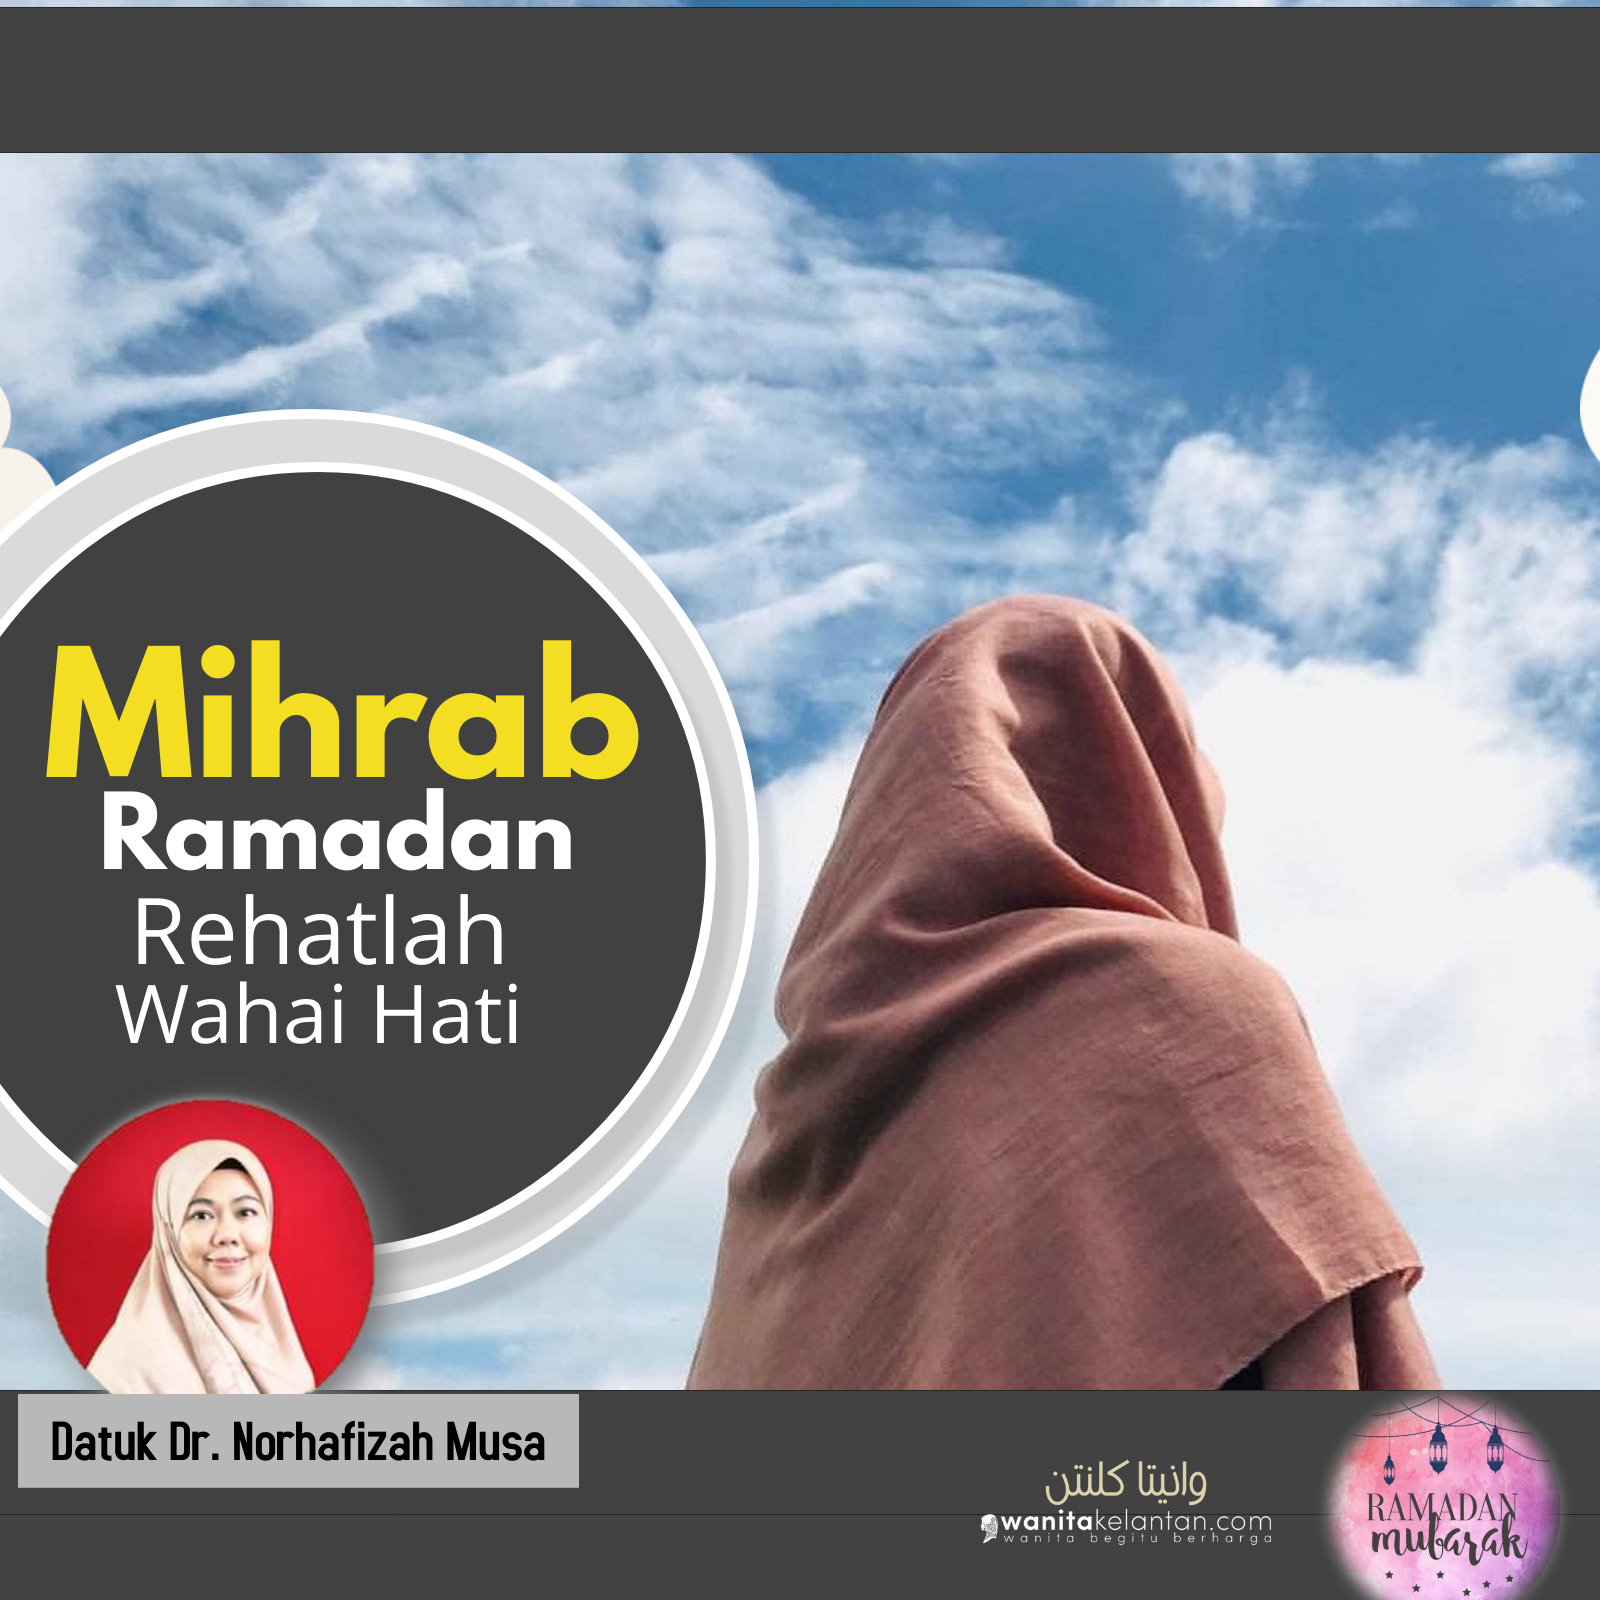 Mihrab Ramadhan Rehatlah Wahai Hati – Made With PosterMyWall (1)